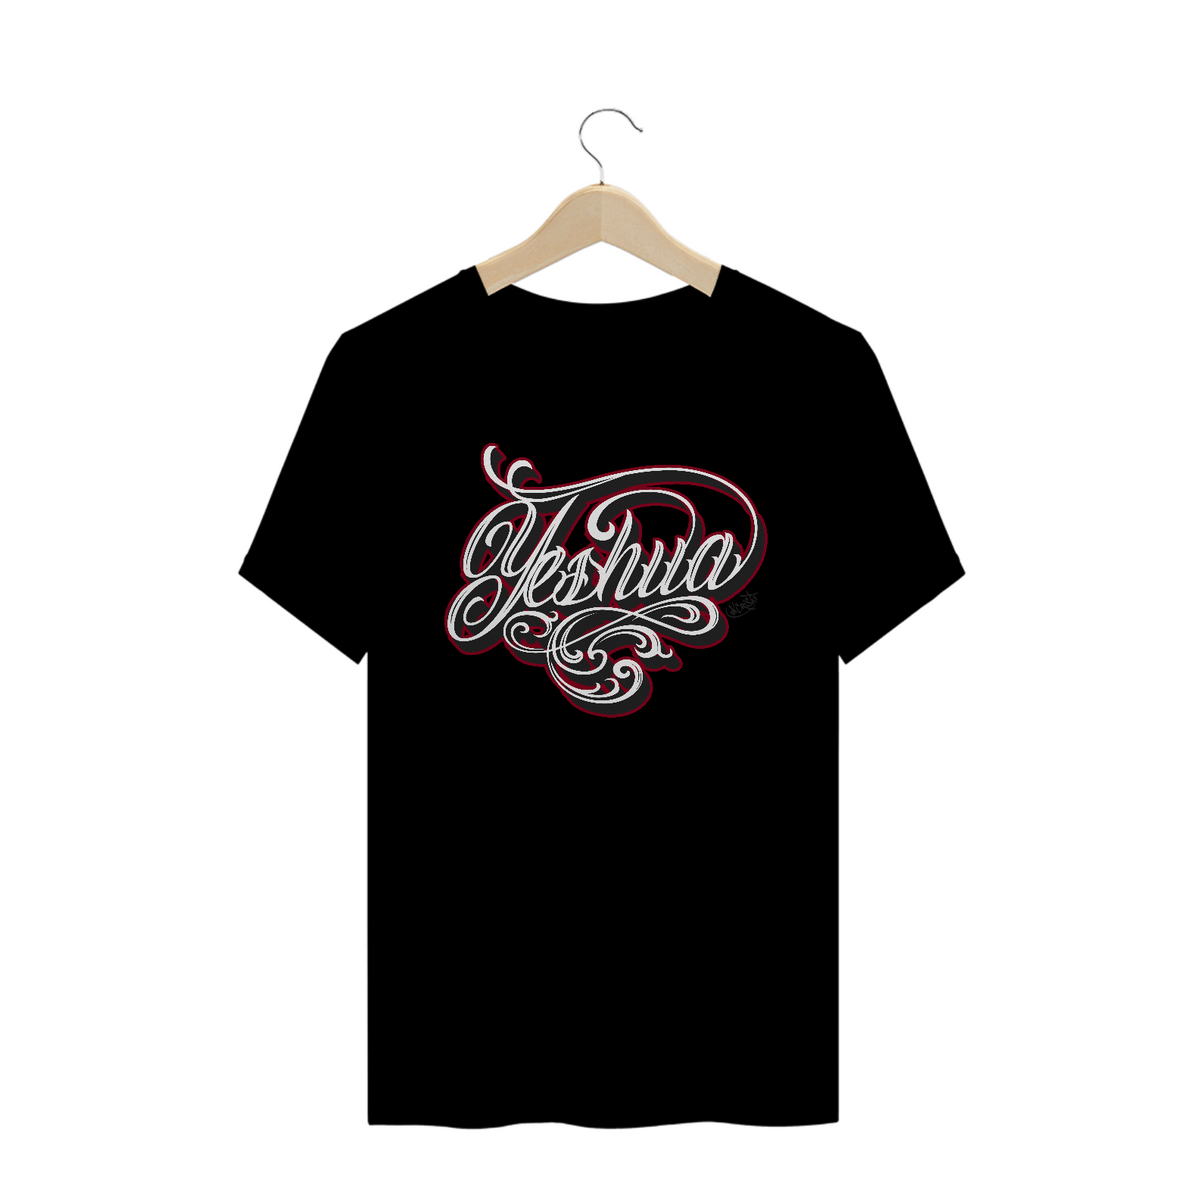 Nome do produto: Camiseta Yeshua